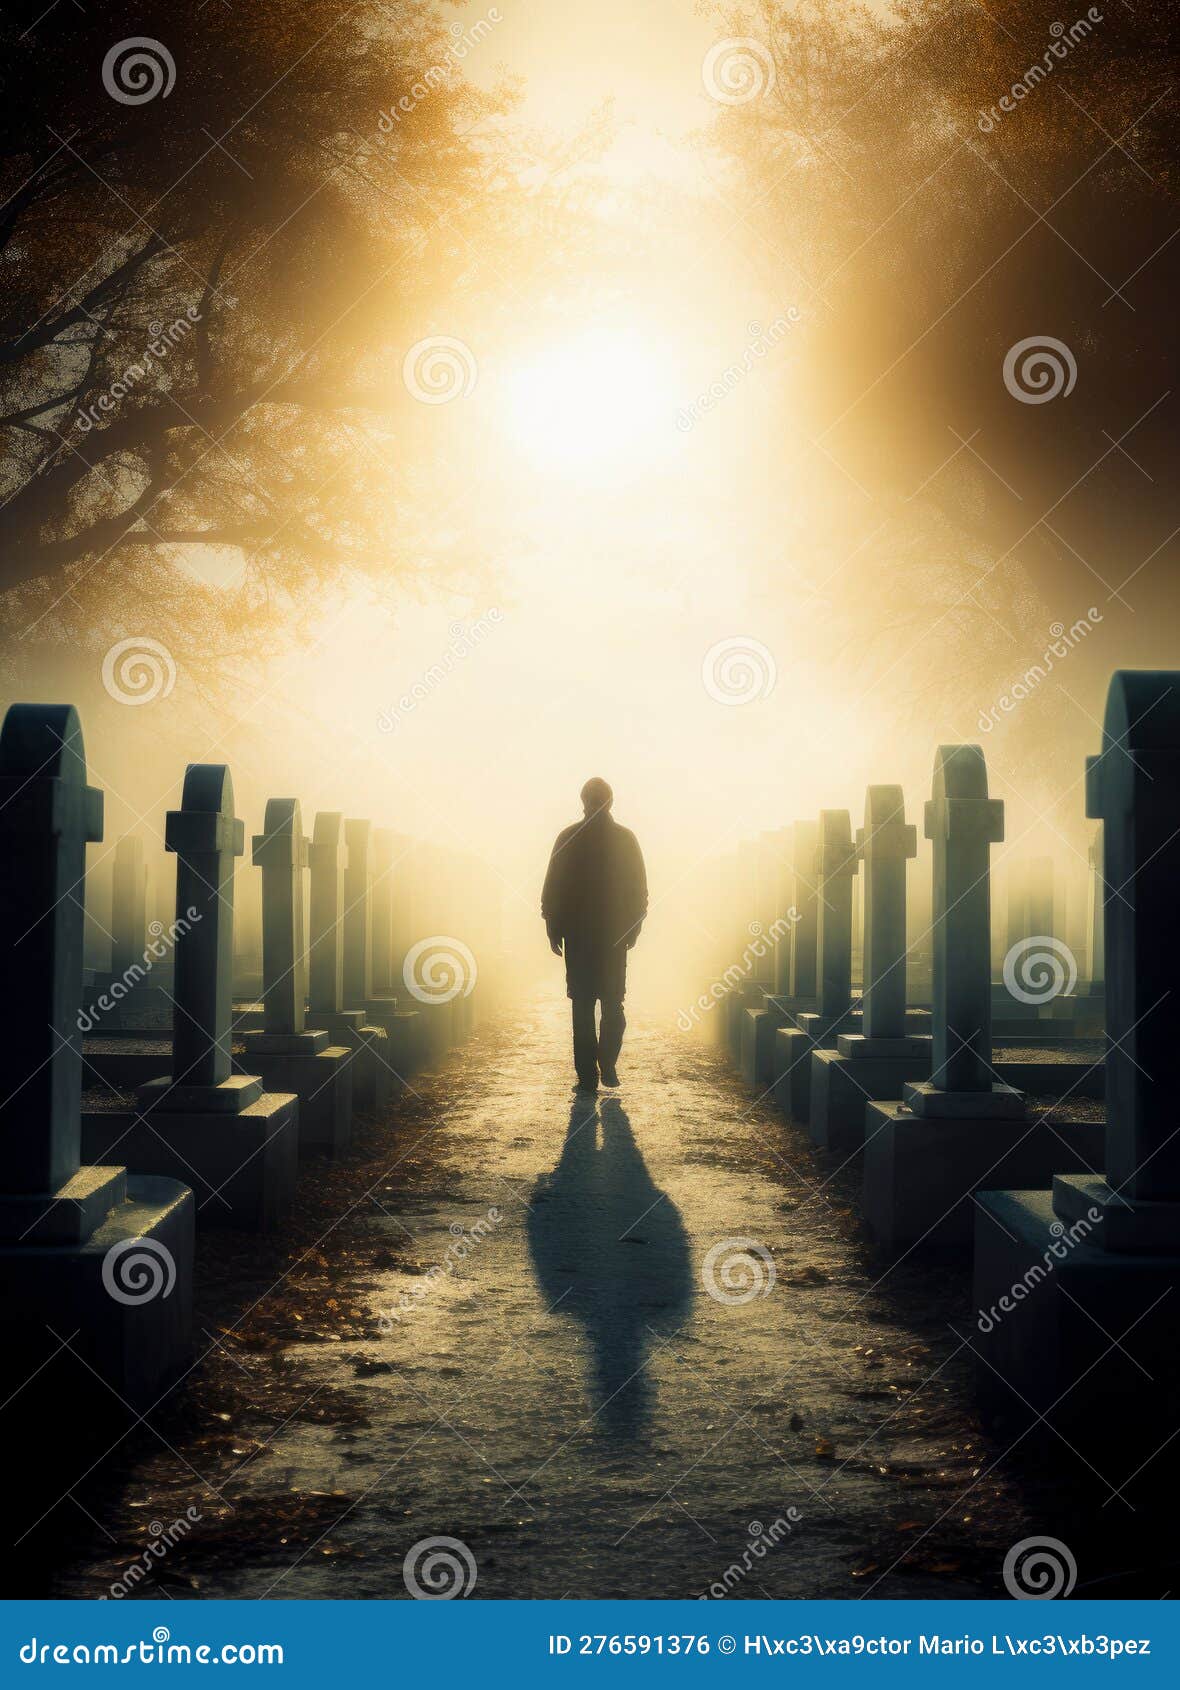 person walking through a cemetery